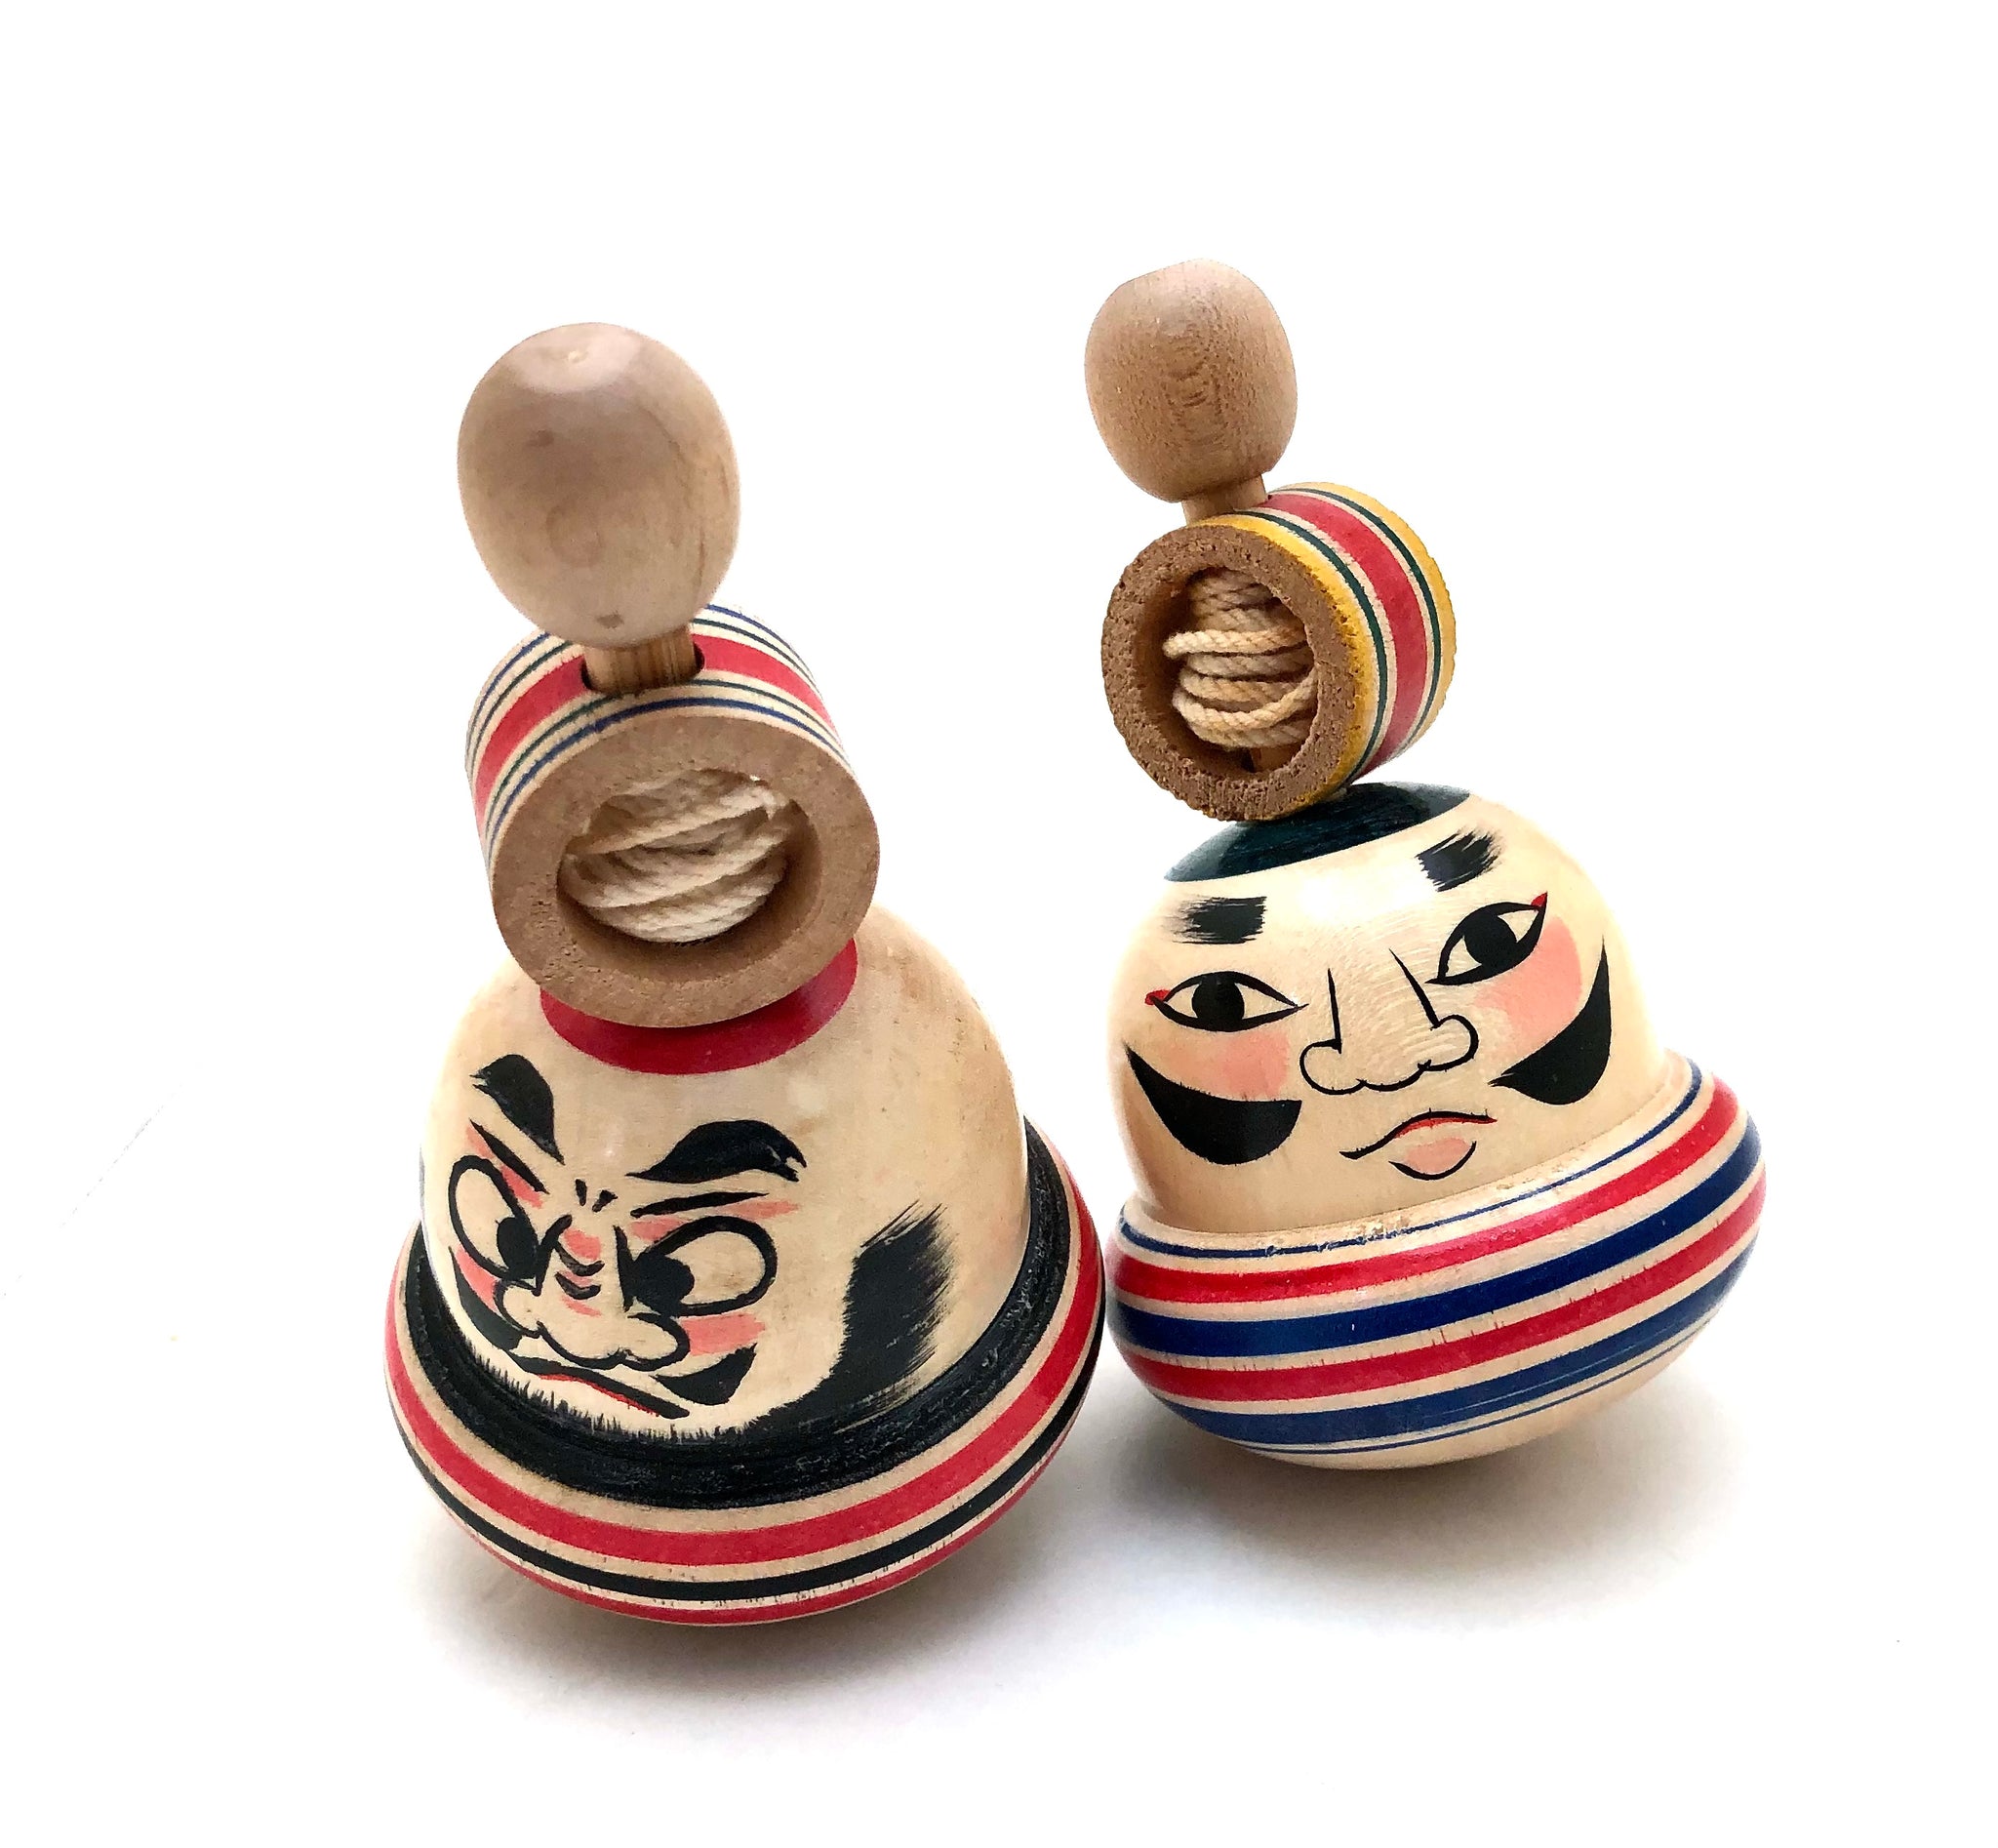 Darumaotoshikendamaand Koma Traditional Japanese Toys Stock Photo -  Download Image Now - iStock